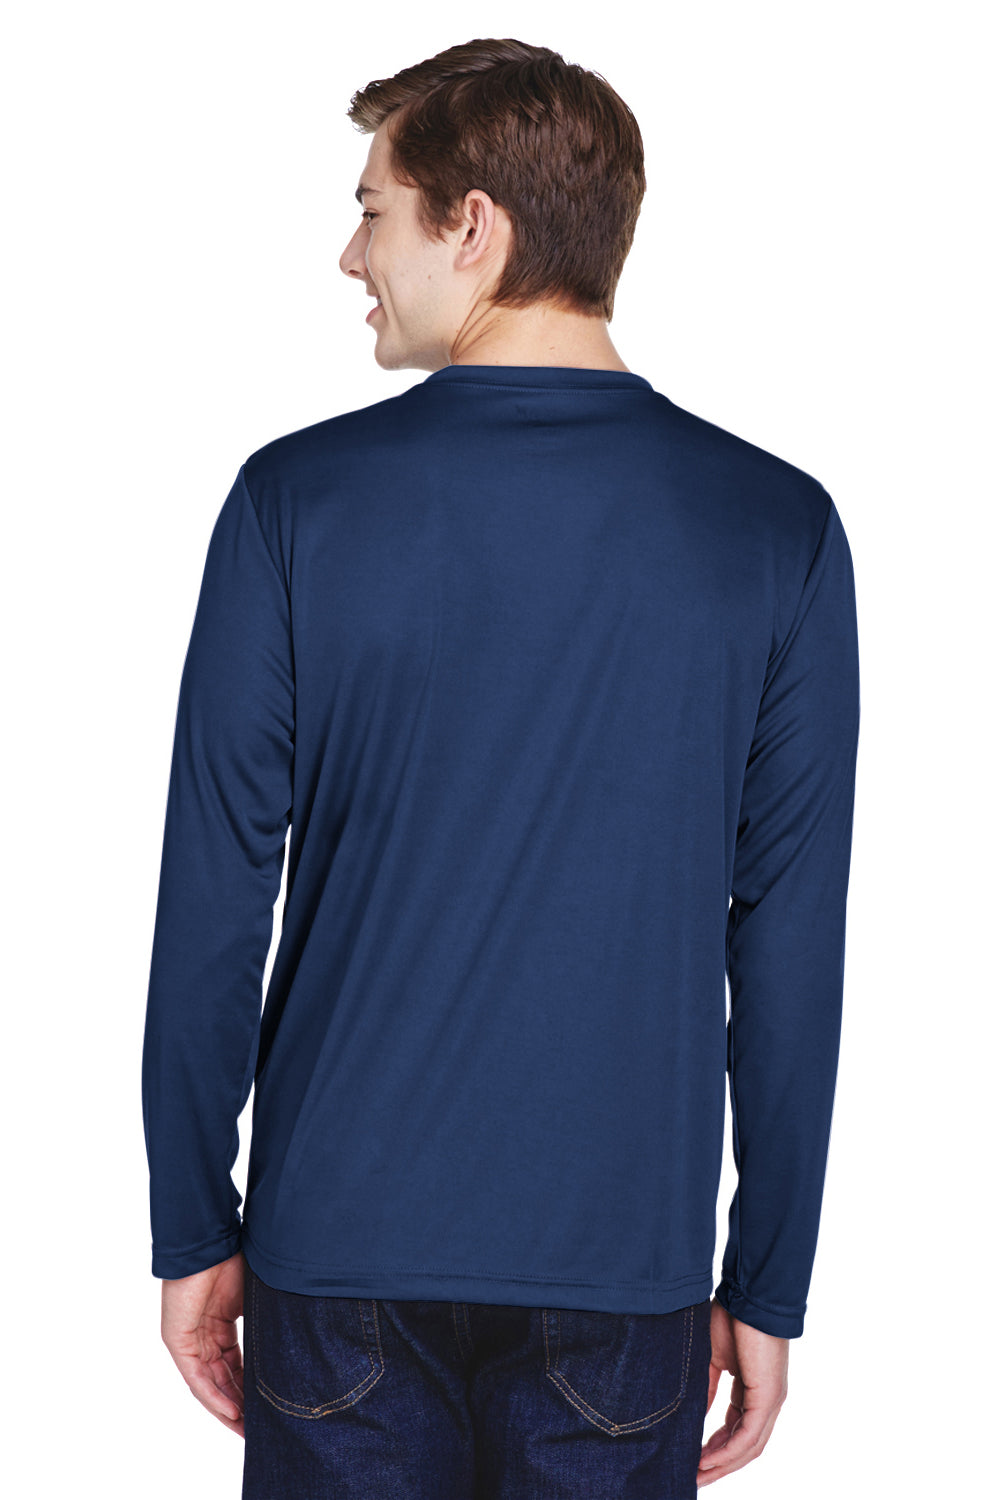 Team 365 TT11L Mens Zone Performance Moisture Wicking Long Sleeve Crewneck T-Shirt Navy Blue Back